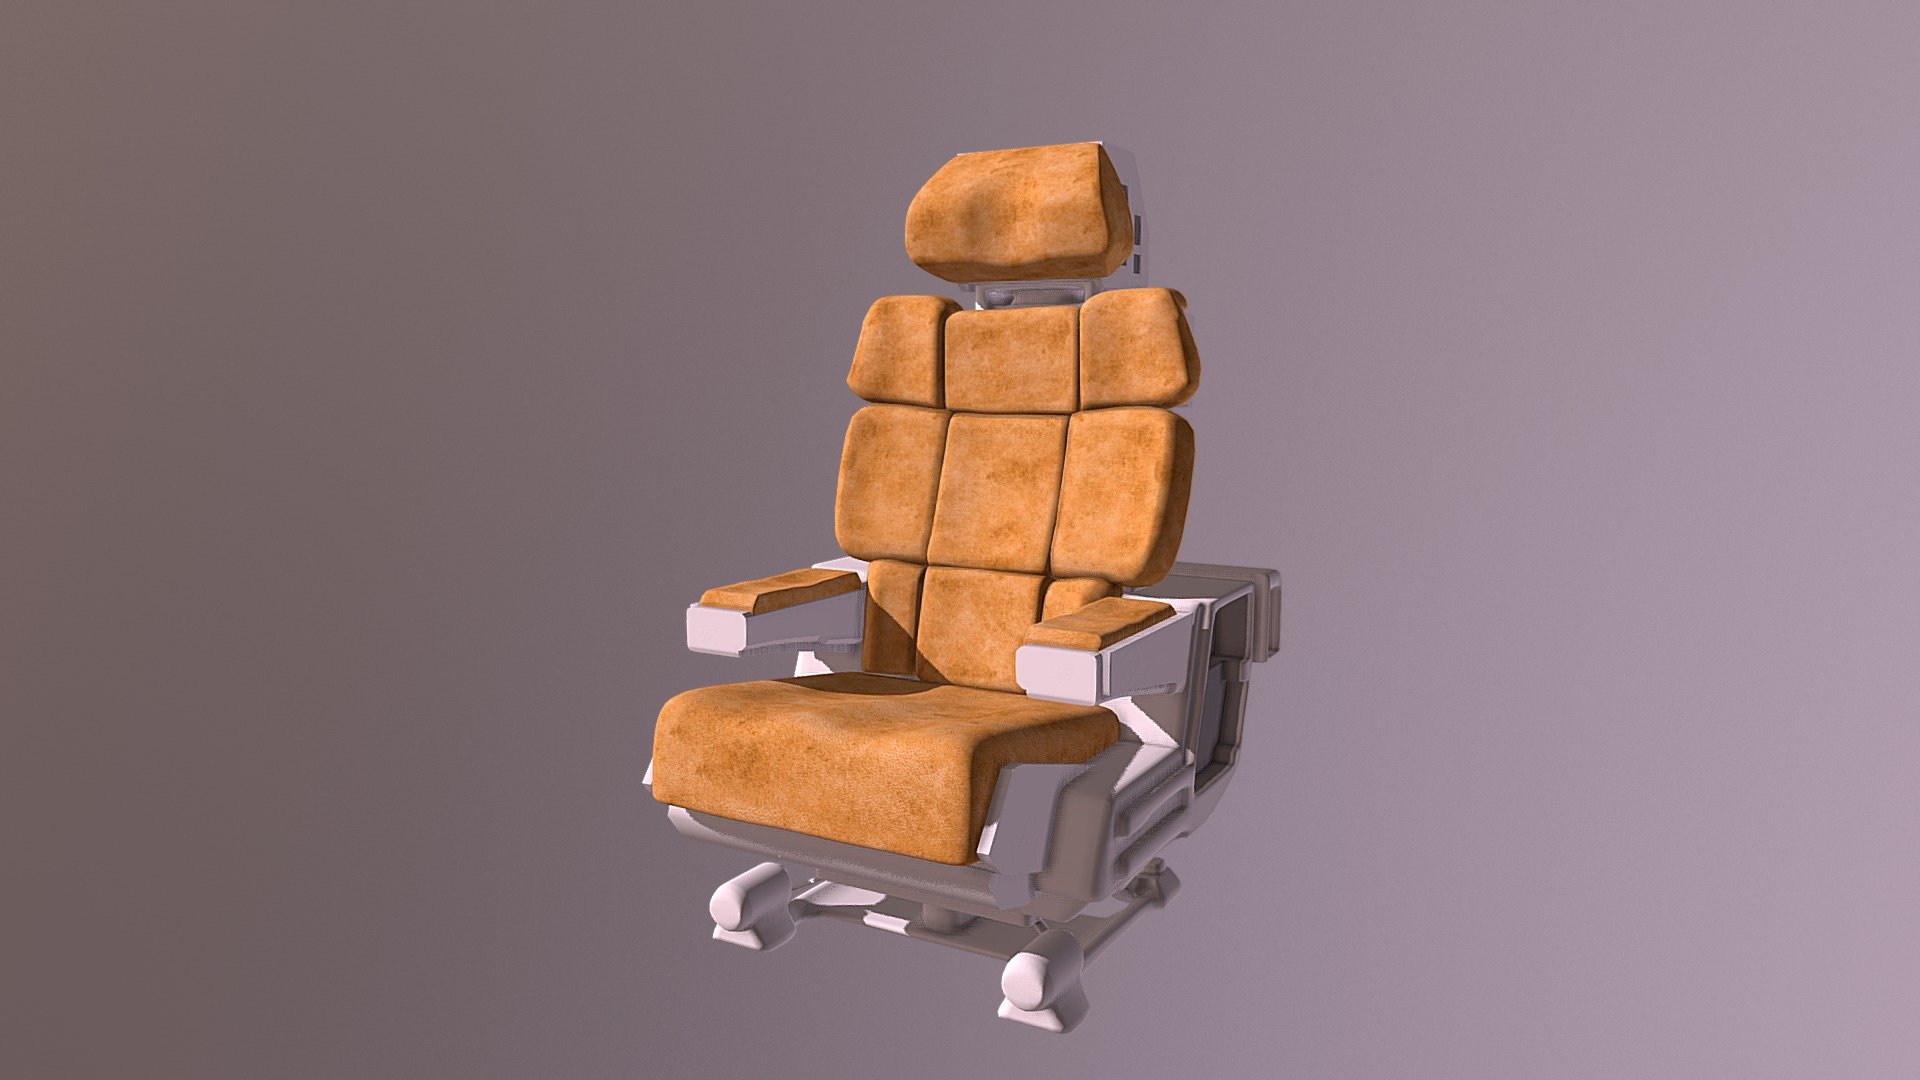 Sci Fi seat based on early concept art for Alien by Ron Cobb.

http://roncobb.net/05-Alien.html - Sci Fi Seat - 3D model by KushaanC (@kchavda) 3d model